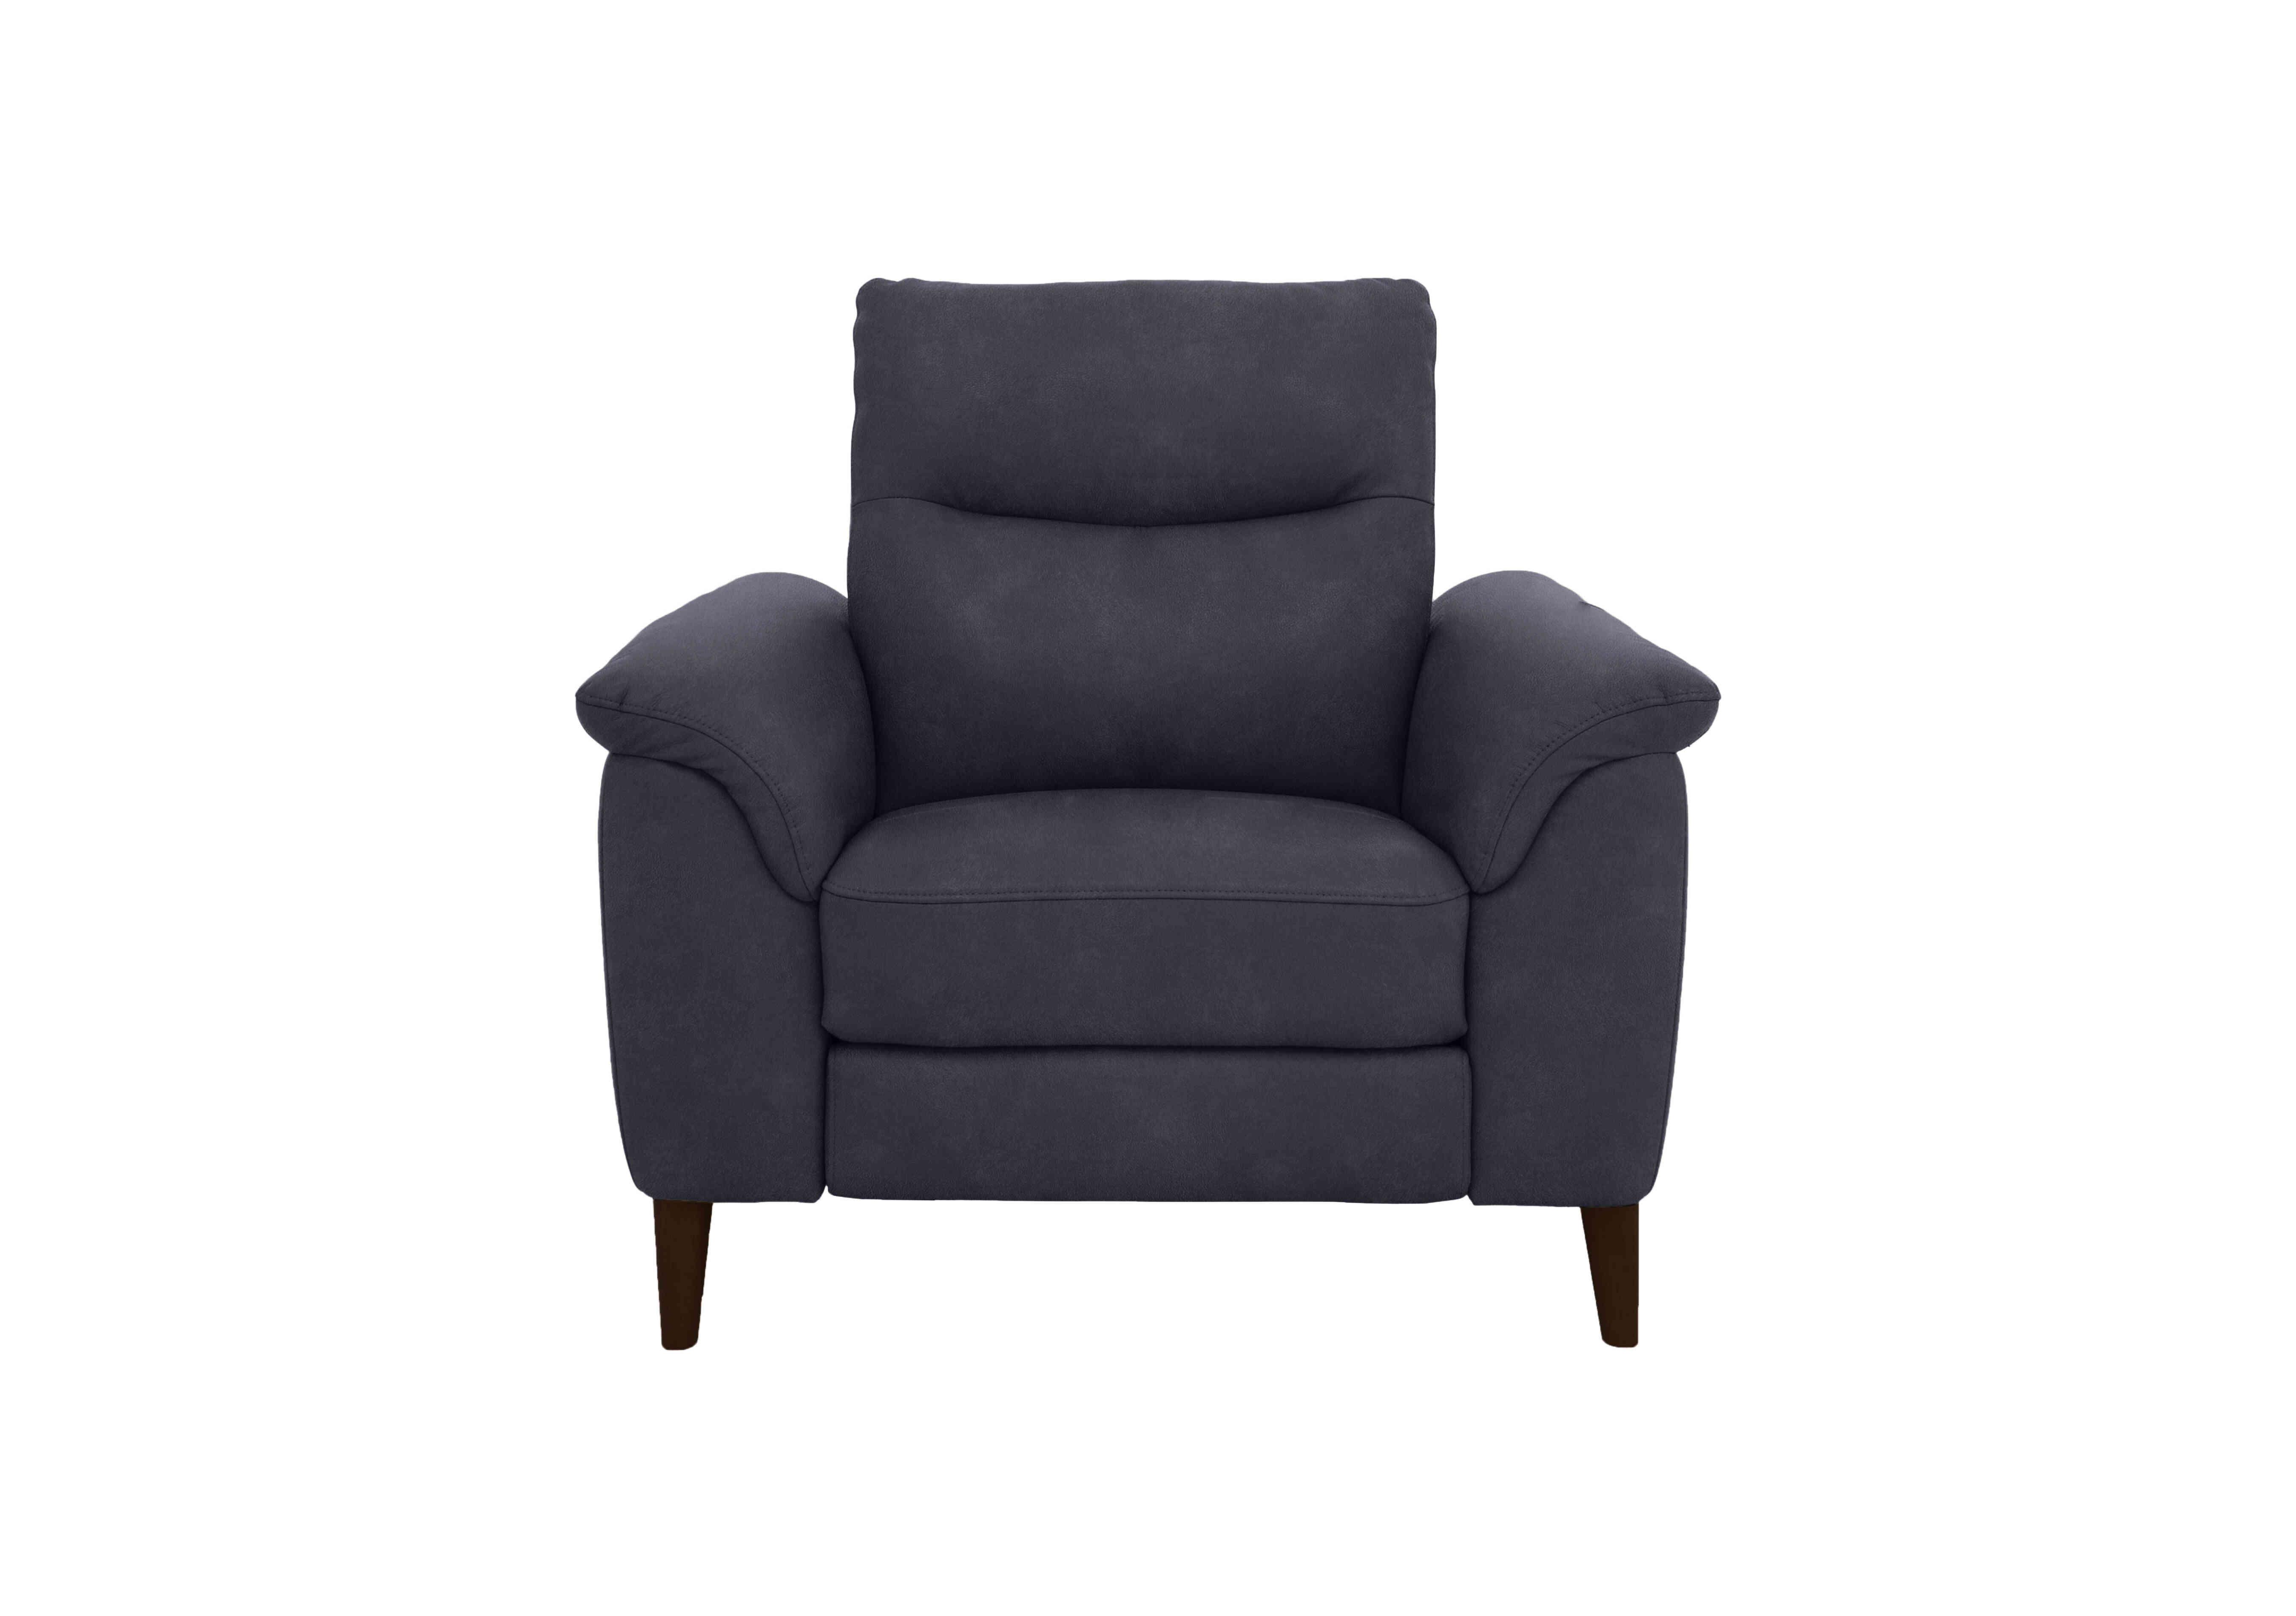 Morgan Fabric Armchair in Shadow Dexter 19 43519 on Furniture Village